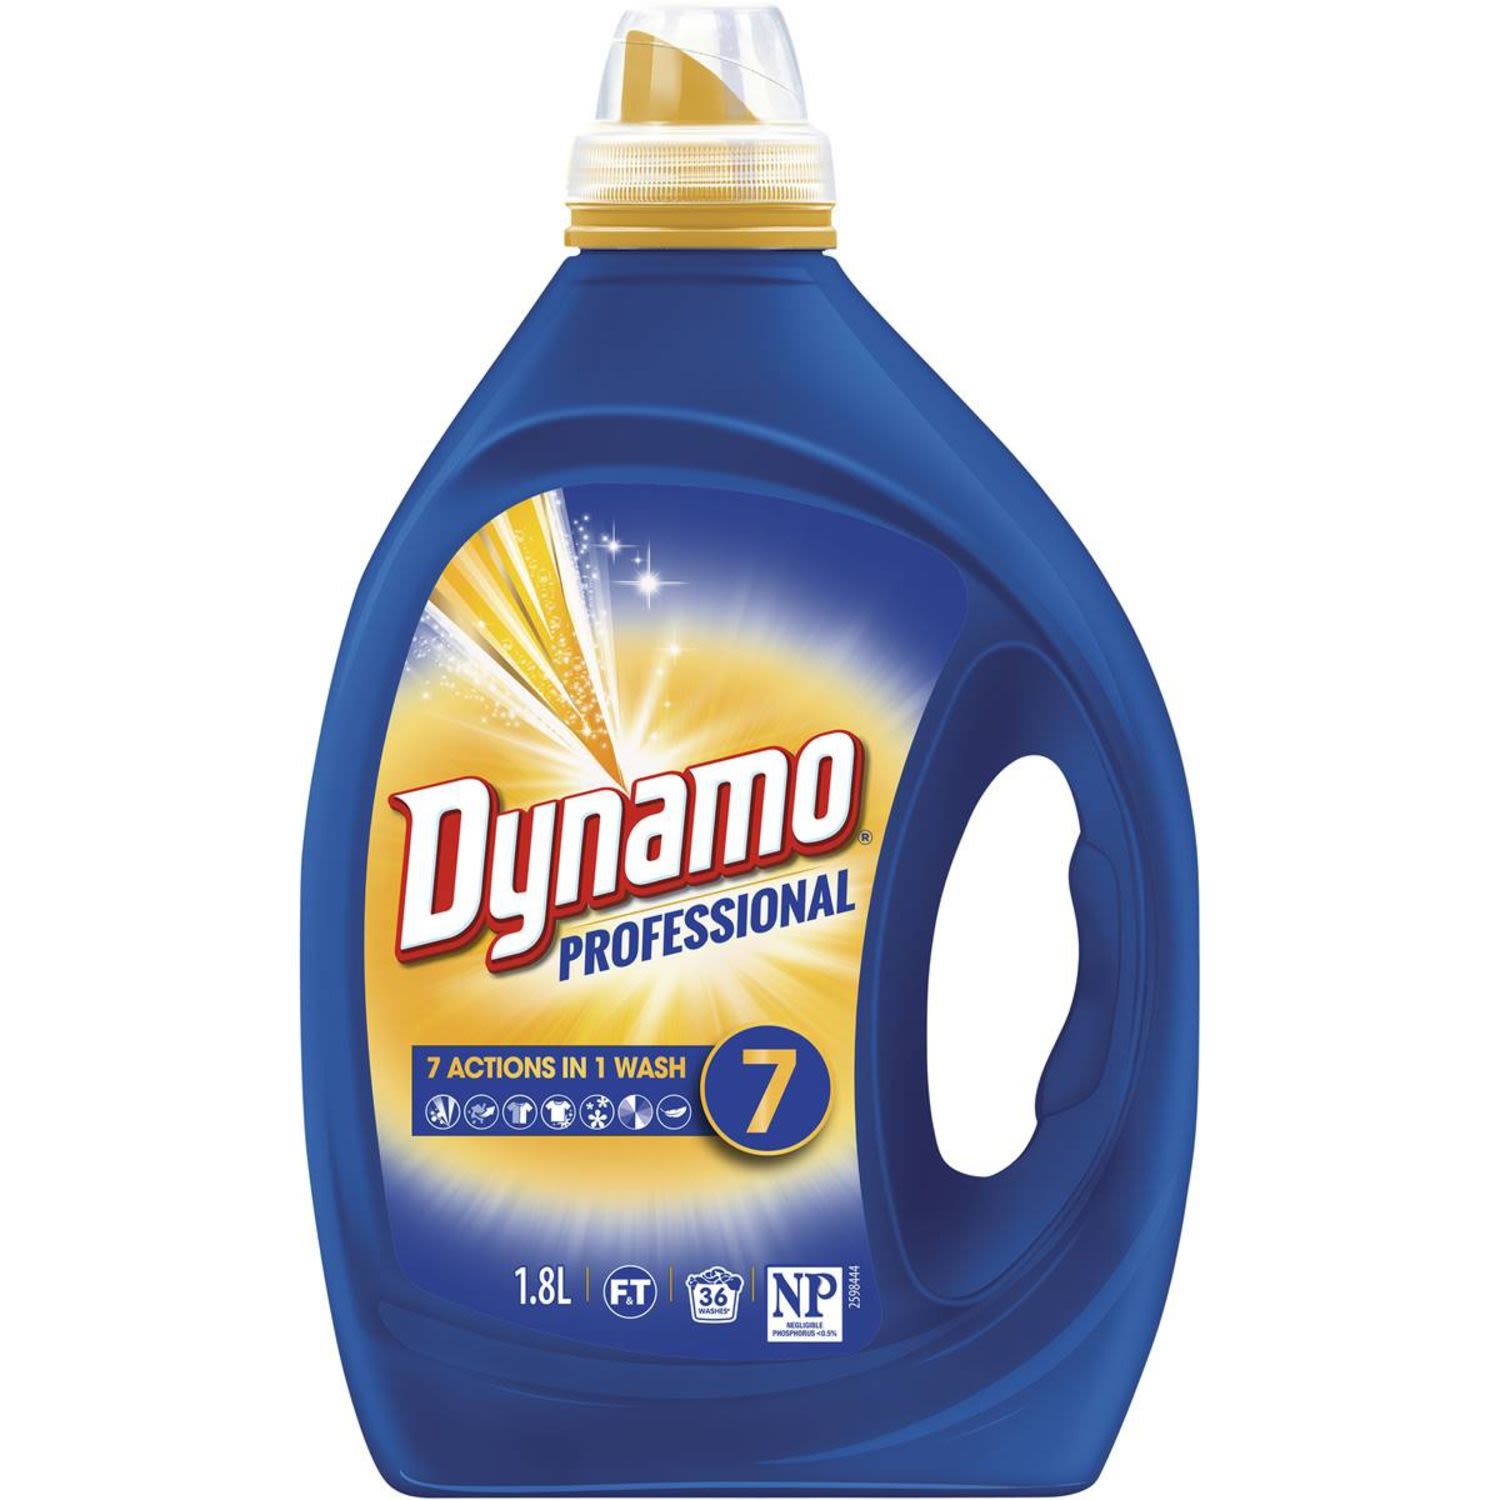 Dynamo Professional 7 in 1 Laundry Detergent Liquid, 1.8 Litre